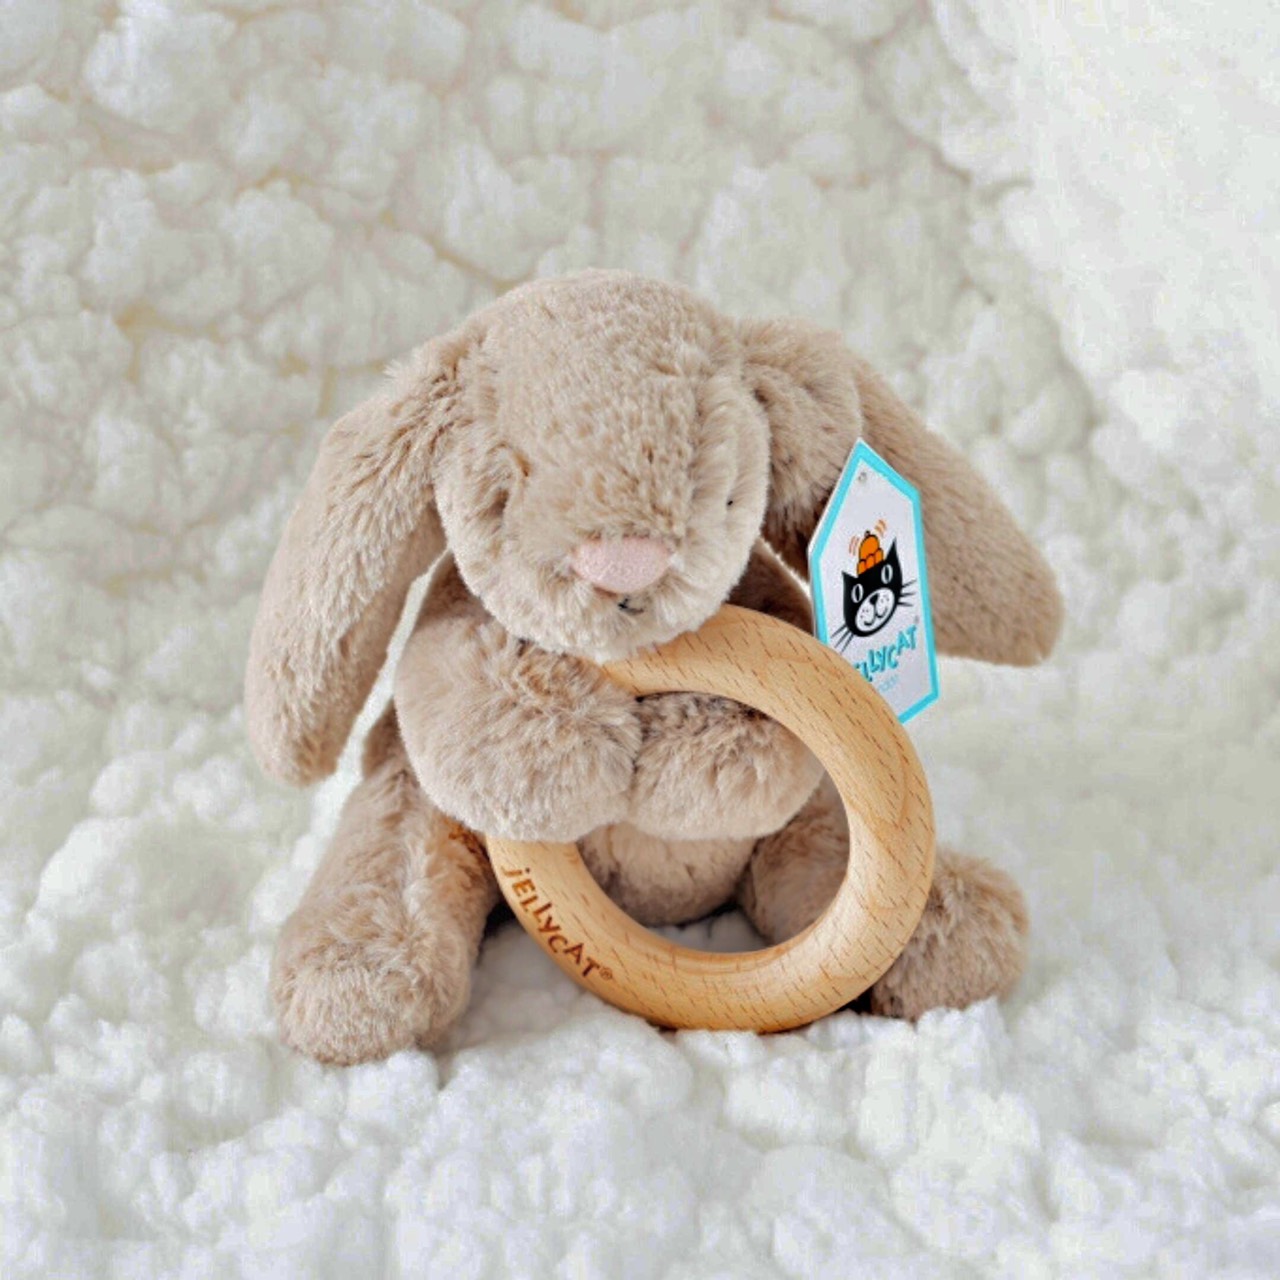 Bashful Beige Bunny Wooden Ring Toy